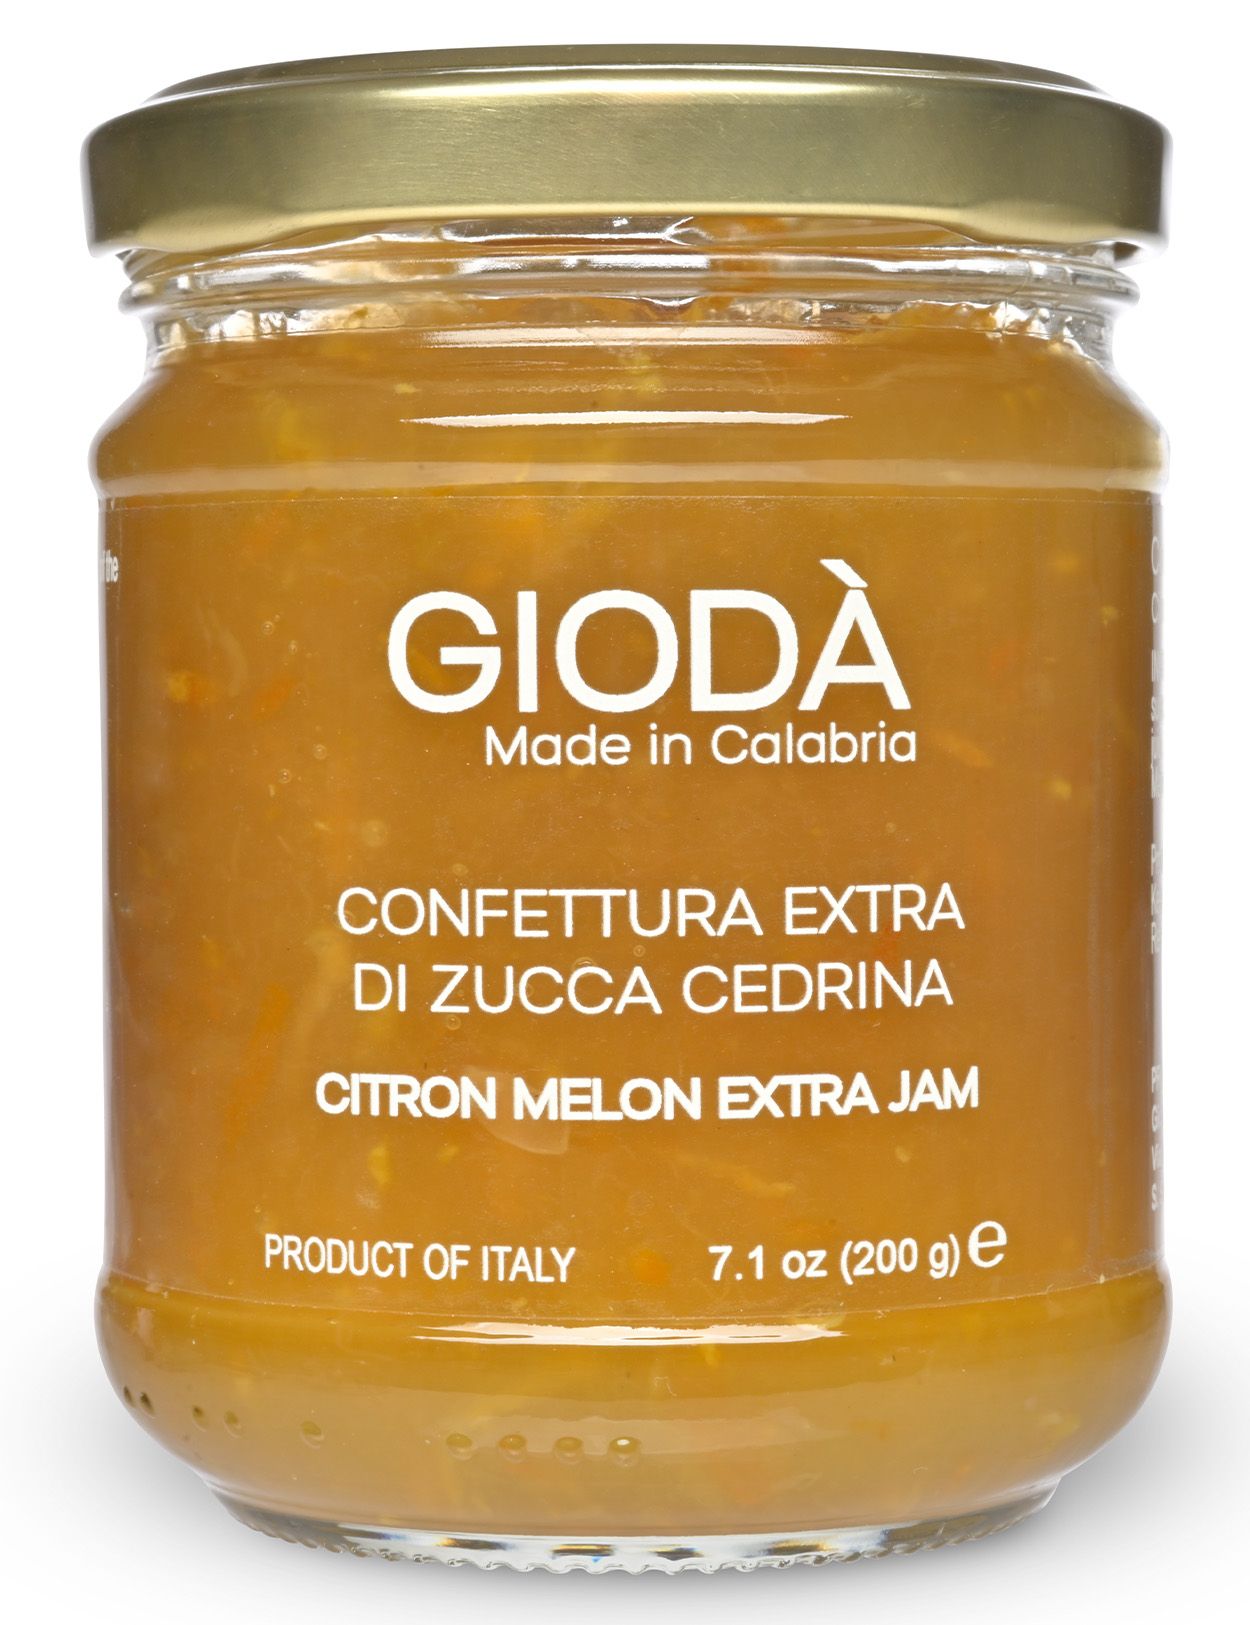 Confettura Extra di Zucca Cedrina - Citron Melon Extra Jam